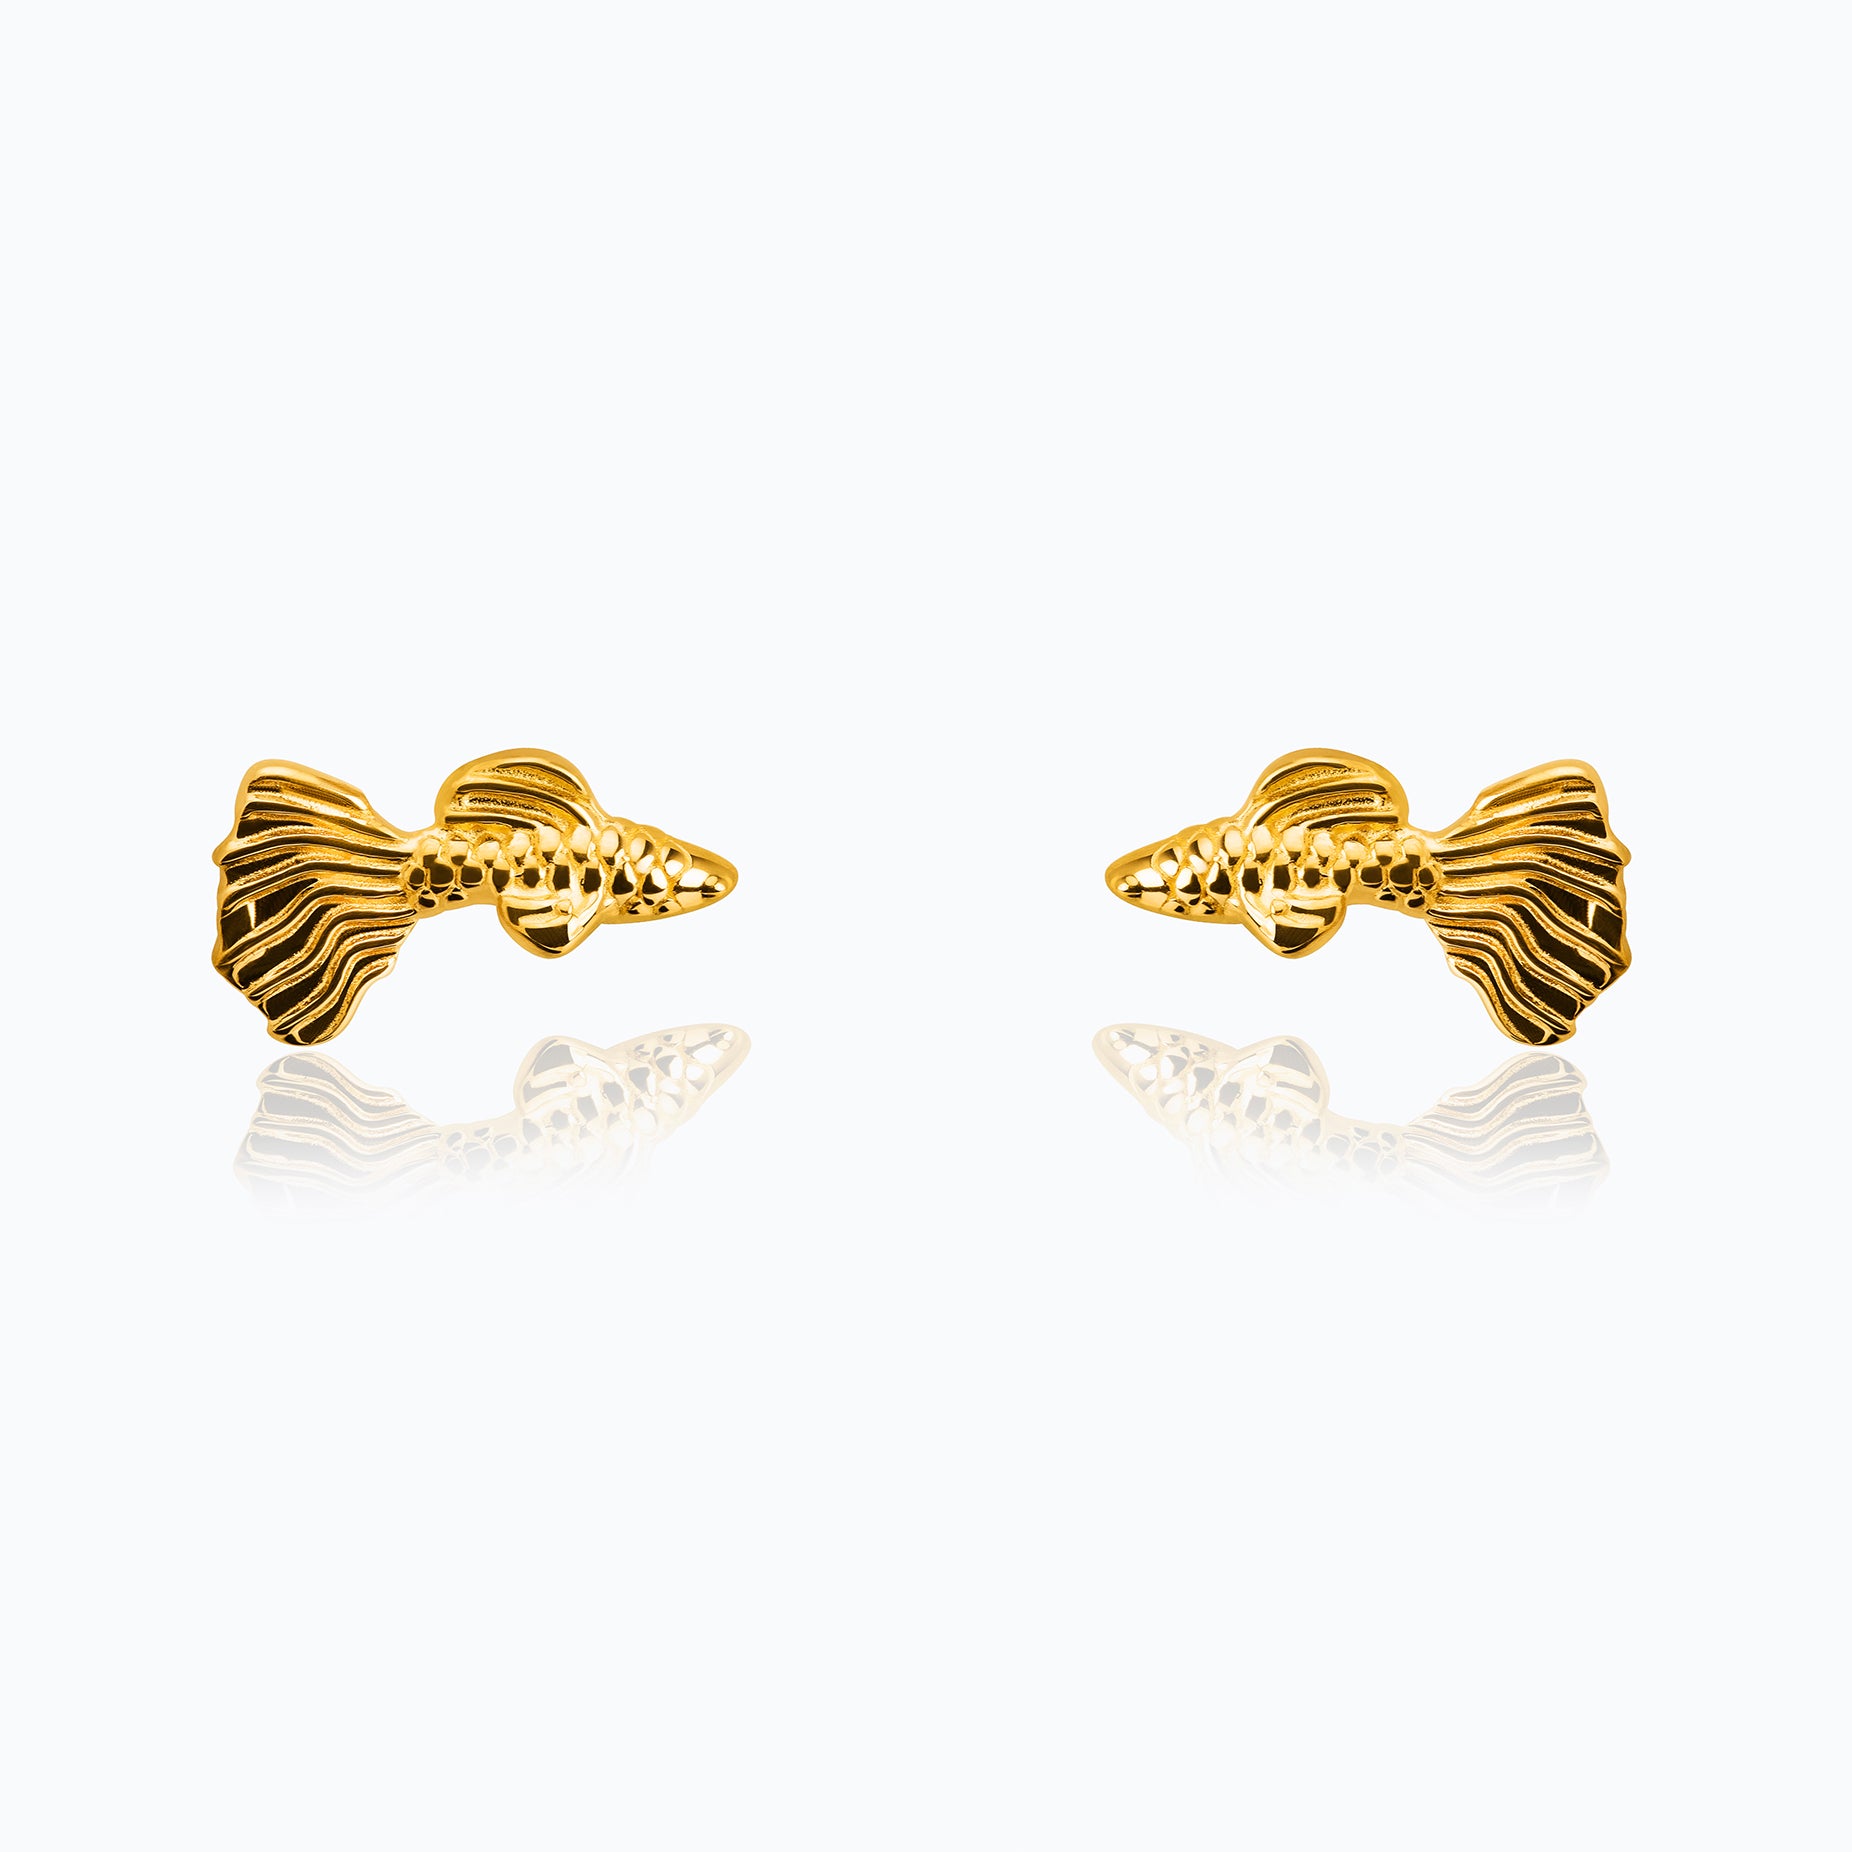 The Golden Fish Earrings